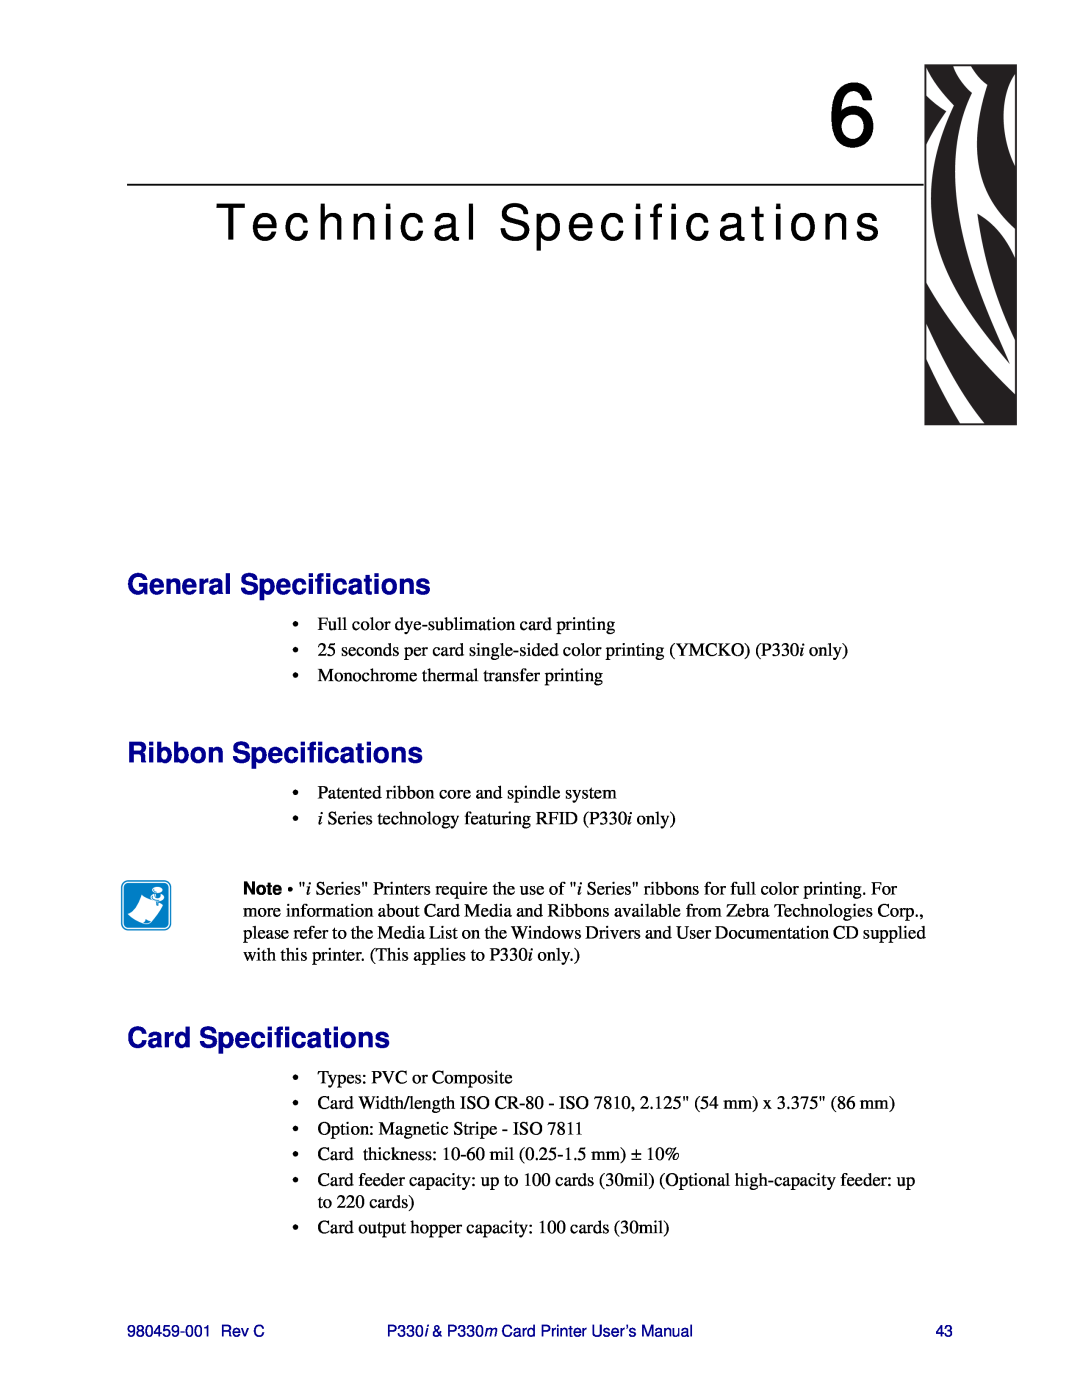 Zebra Technologies P330m Technical Specifications, General Specifications, Ribbon Specifications, Card Specifications 